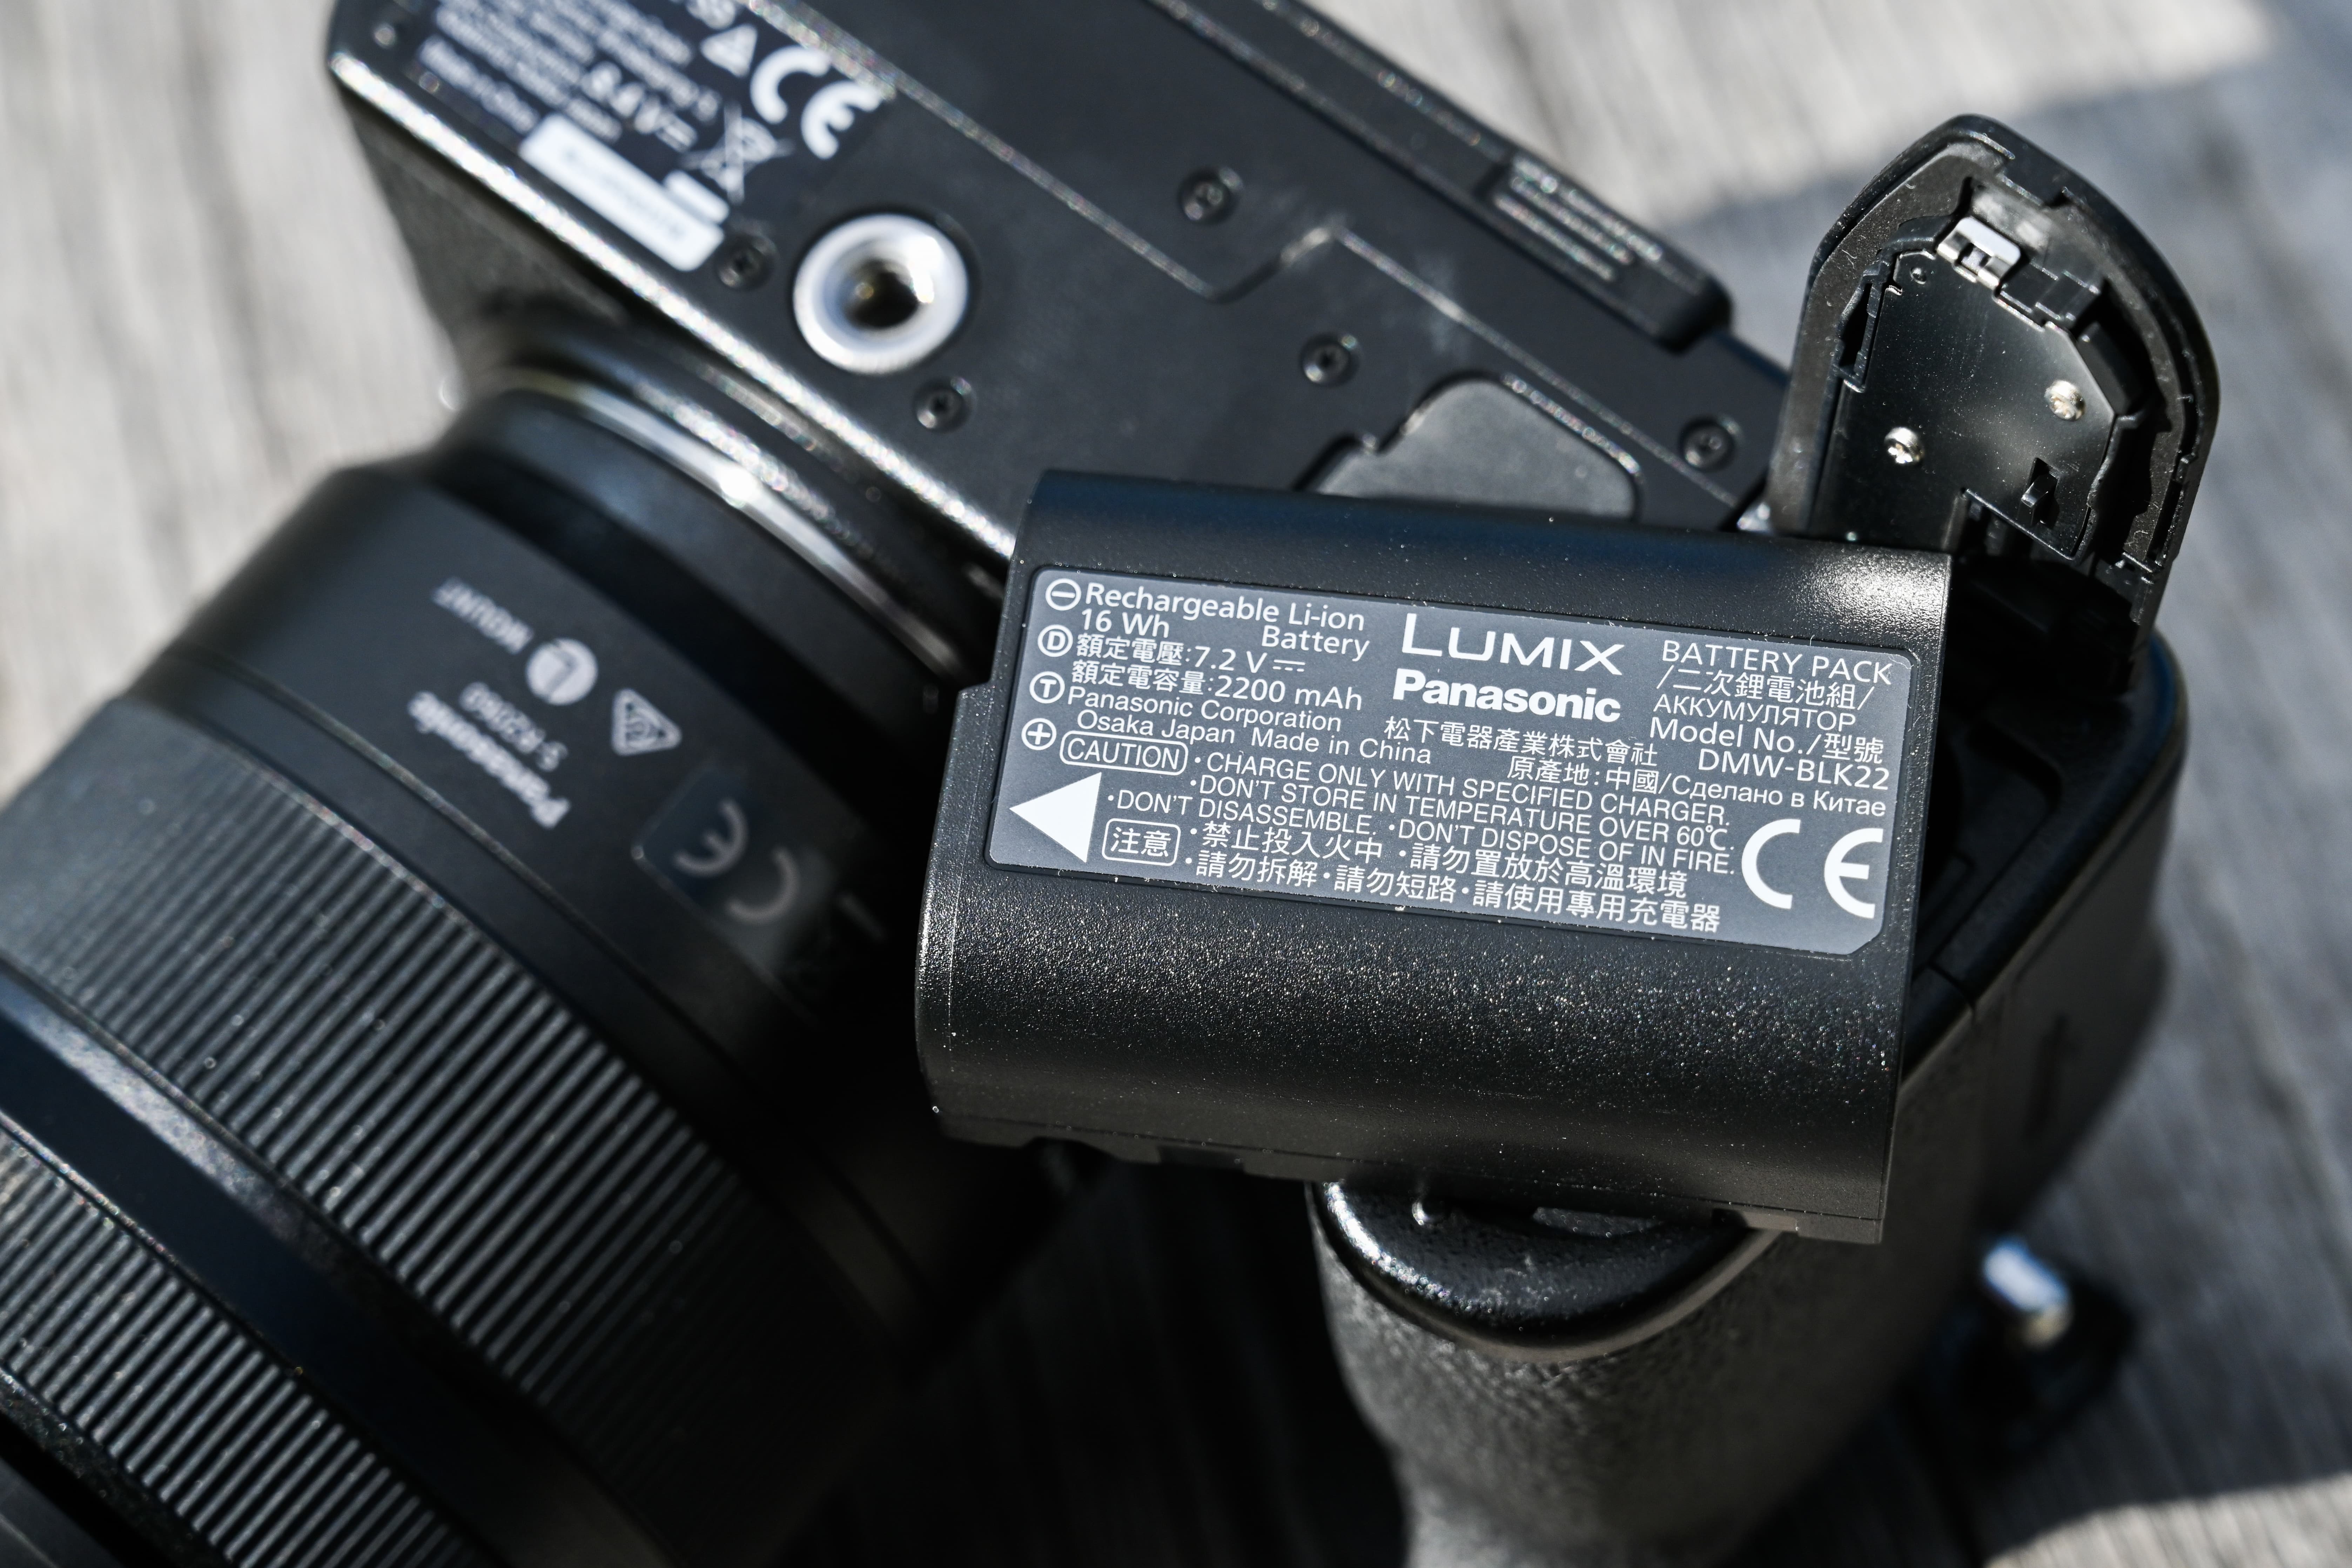 Panasonic Lumix S5 review - Amateur Photographer